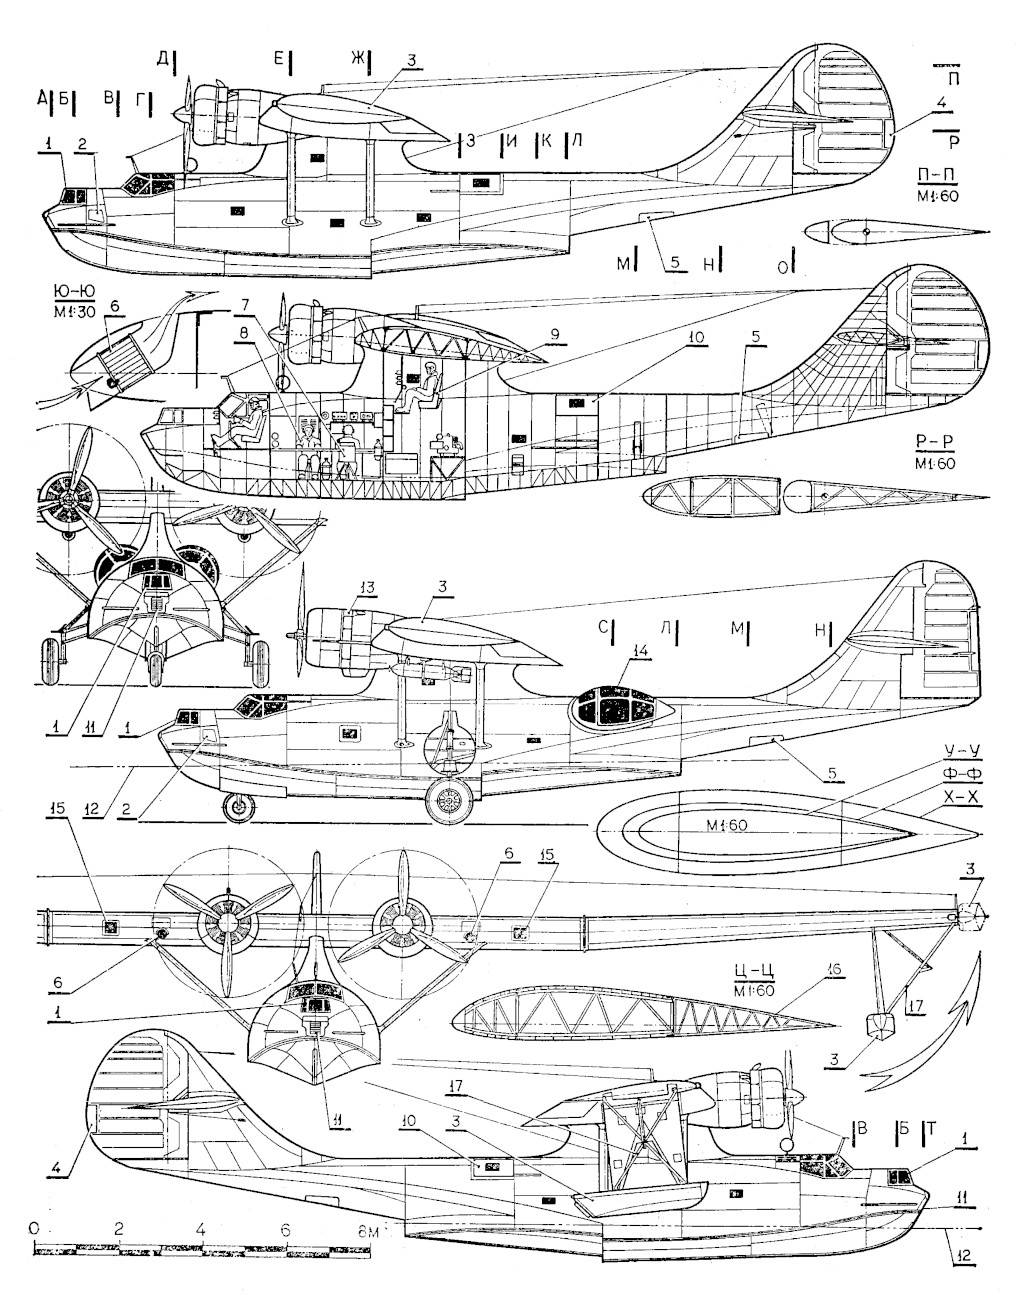 Самолёт каталина: амфибия, consolidated pby catalina, история создания, конструкция, характеристики (ттх)